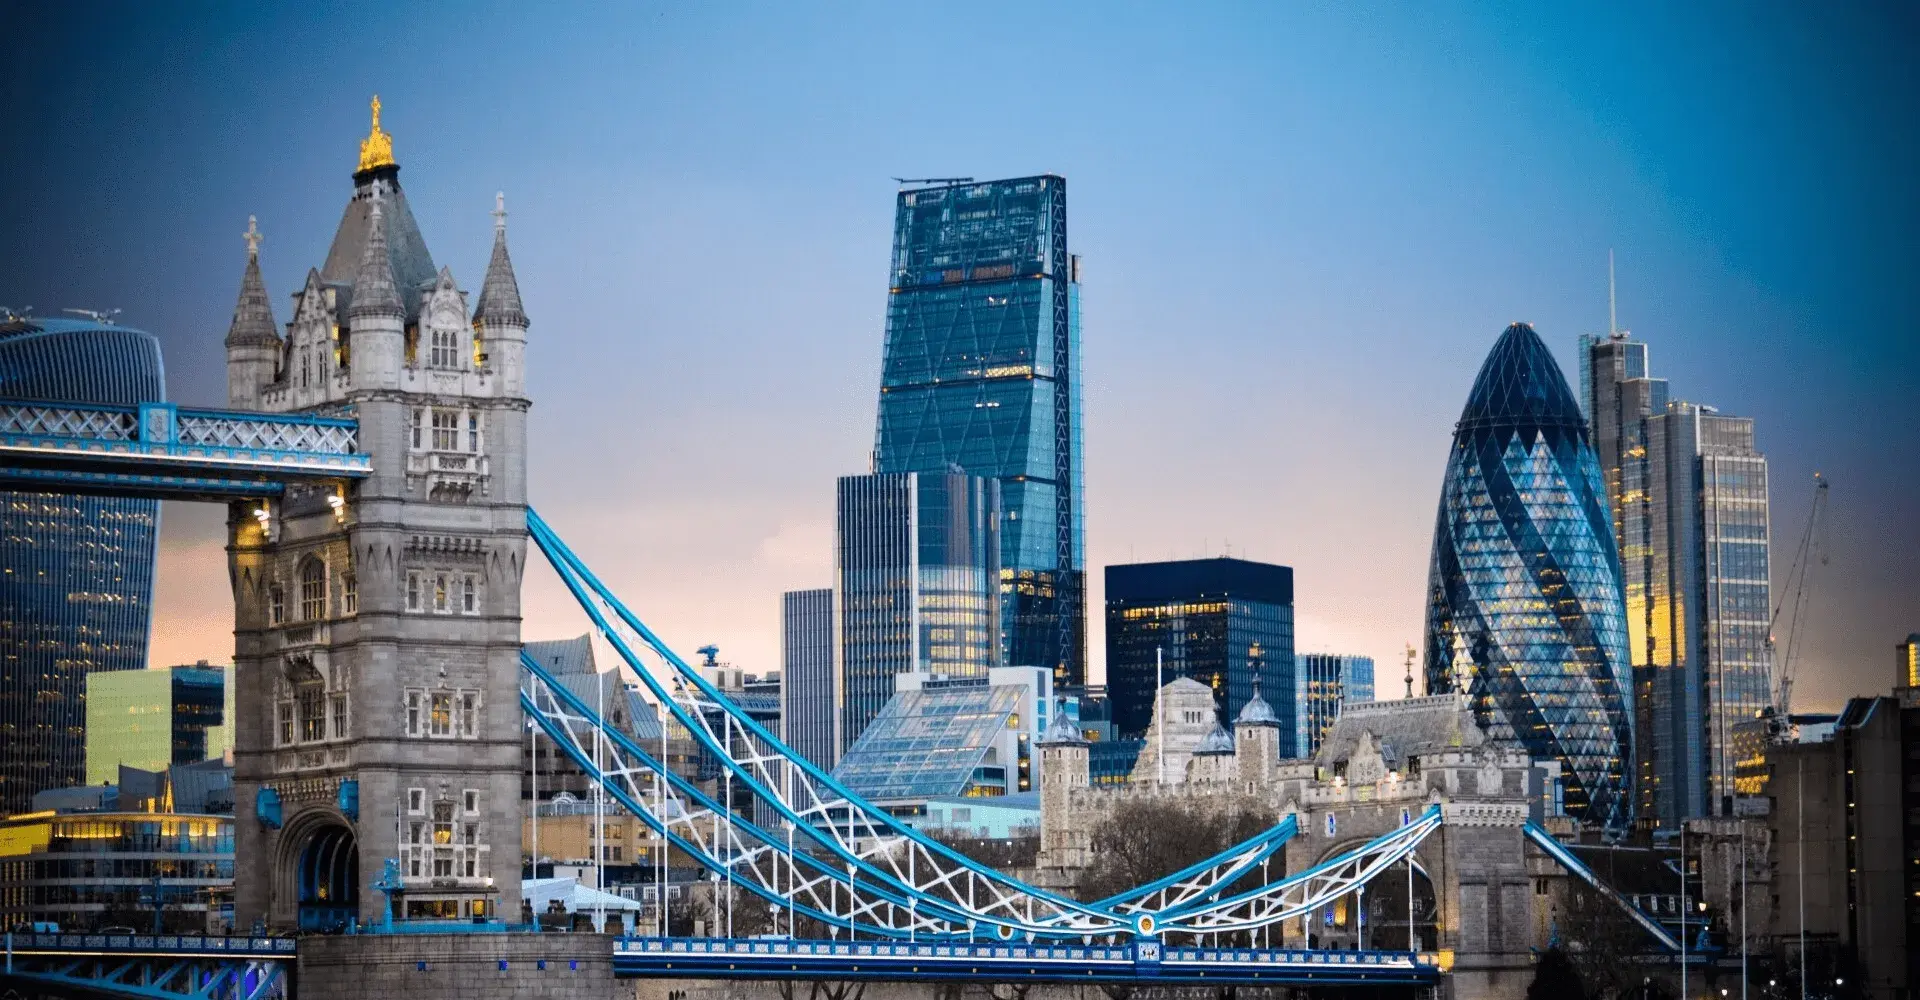 Tower bridge and urban buildings in London